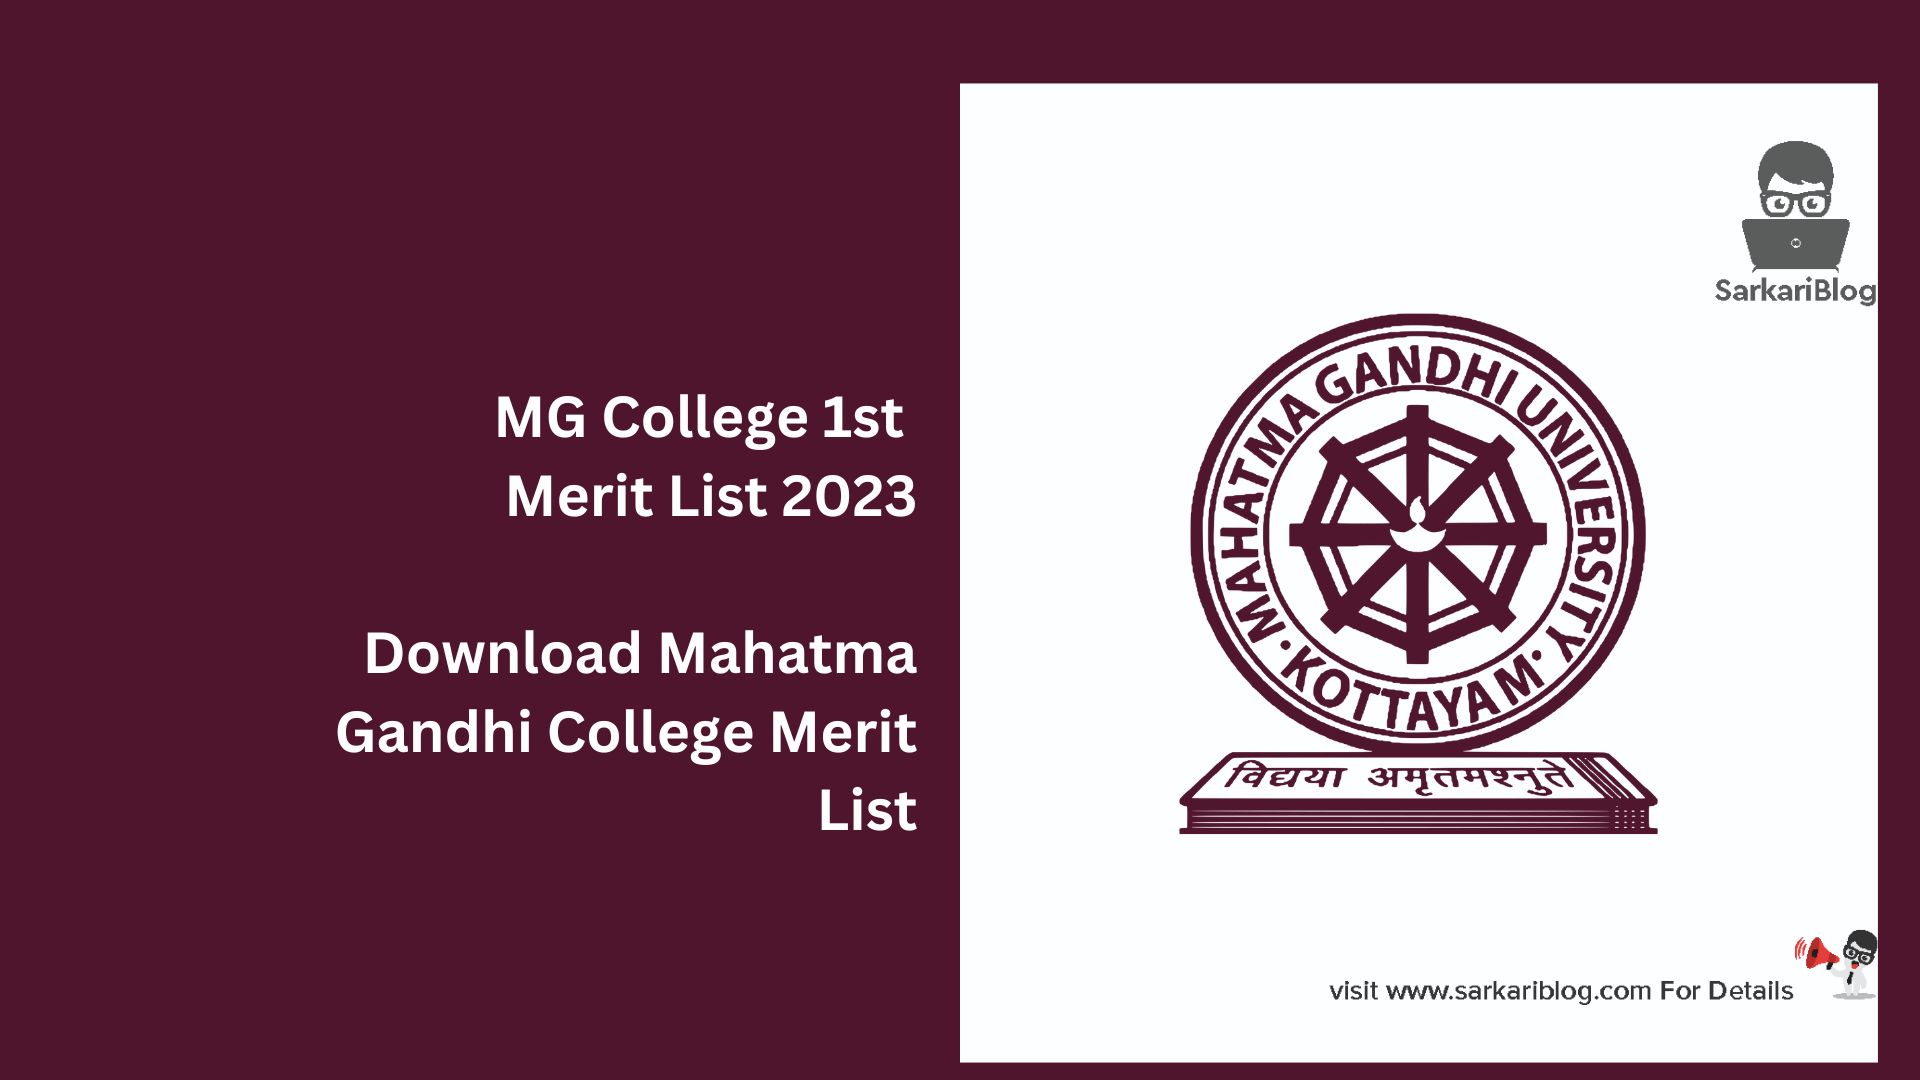 MG College 1st Merit List 2023